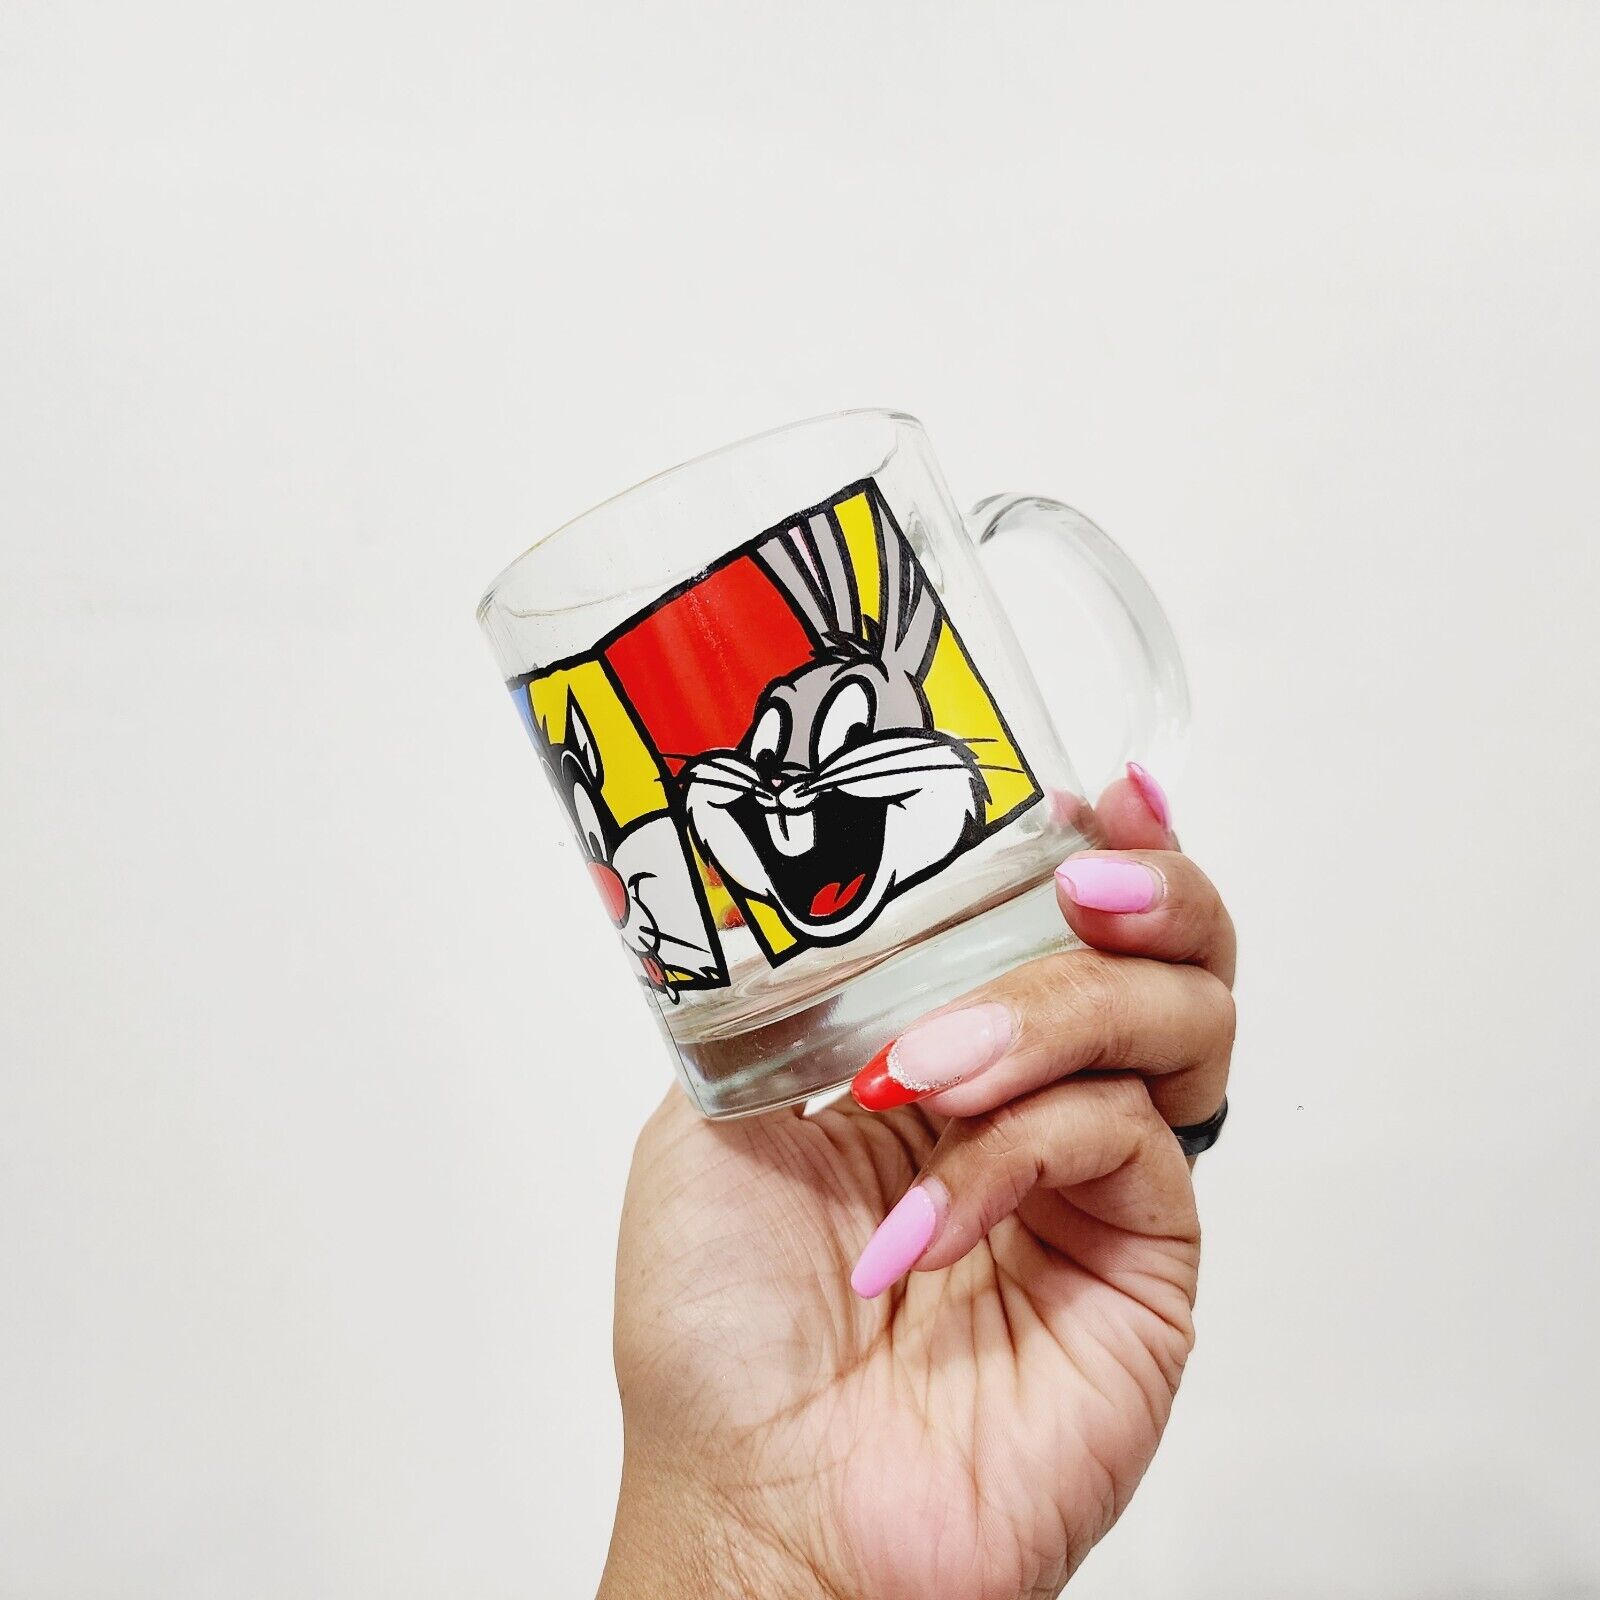 Vintage 1994 Anchor Hocking Warner Bros Looney Tunes Glass Mugs Cups Set of 4